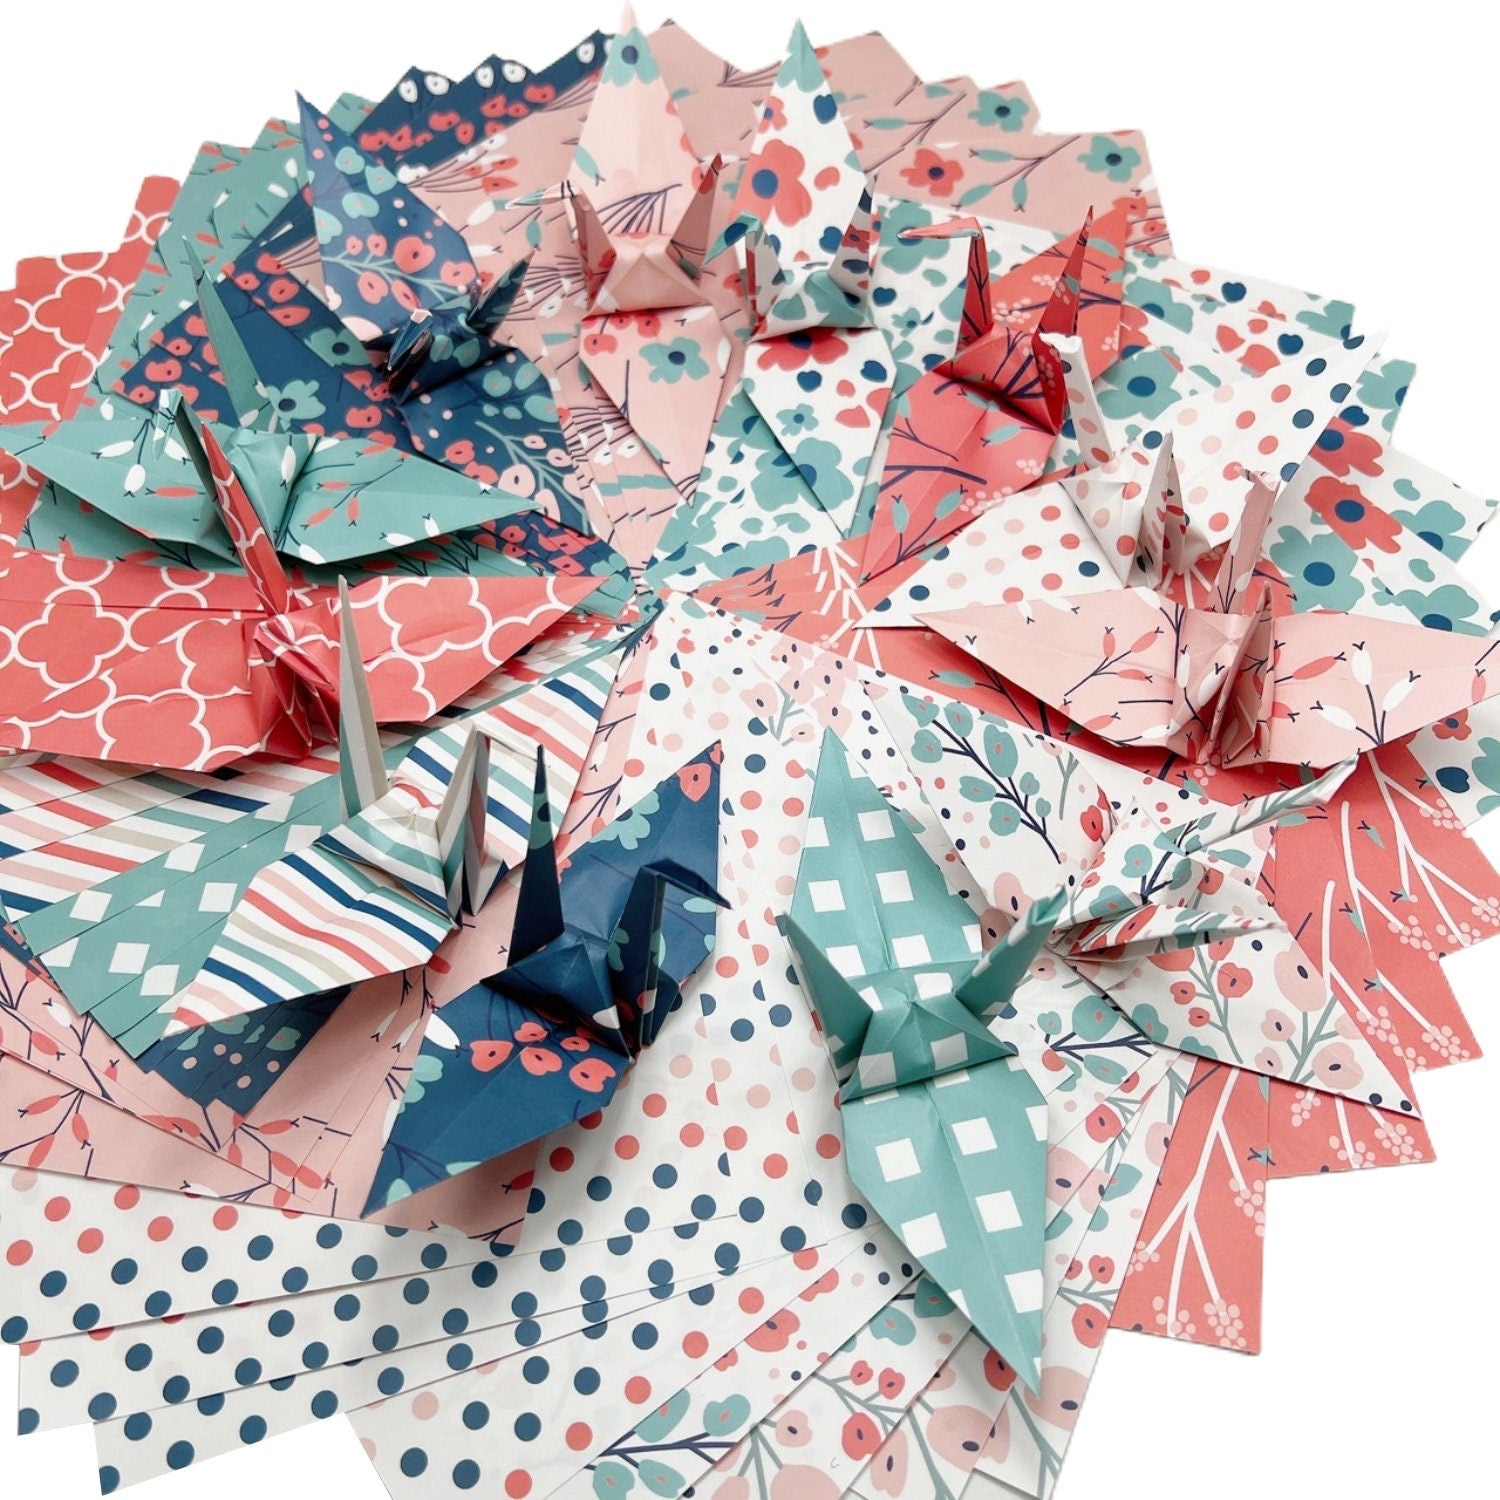 50 fogli di carta origami fantasia - 6x6 pollici - lato singolo - per arte cartacea, piegatura, gru origami, scrapbooking - design floreale